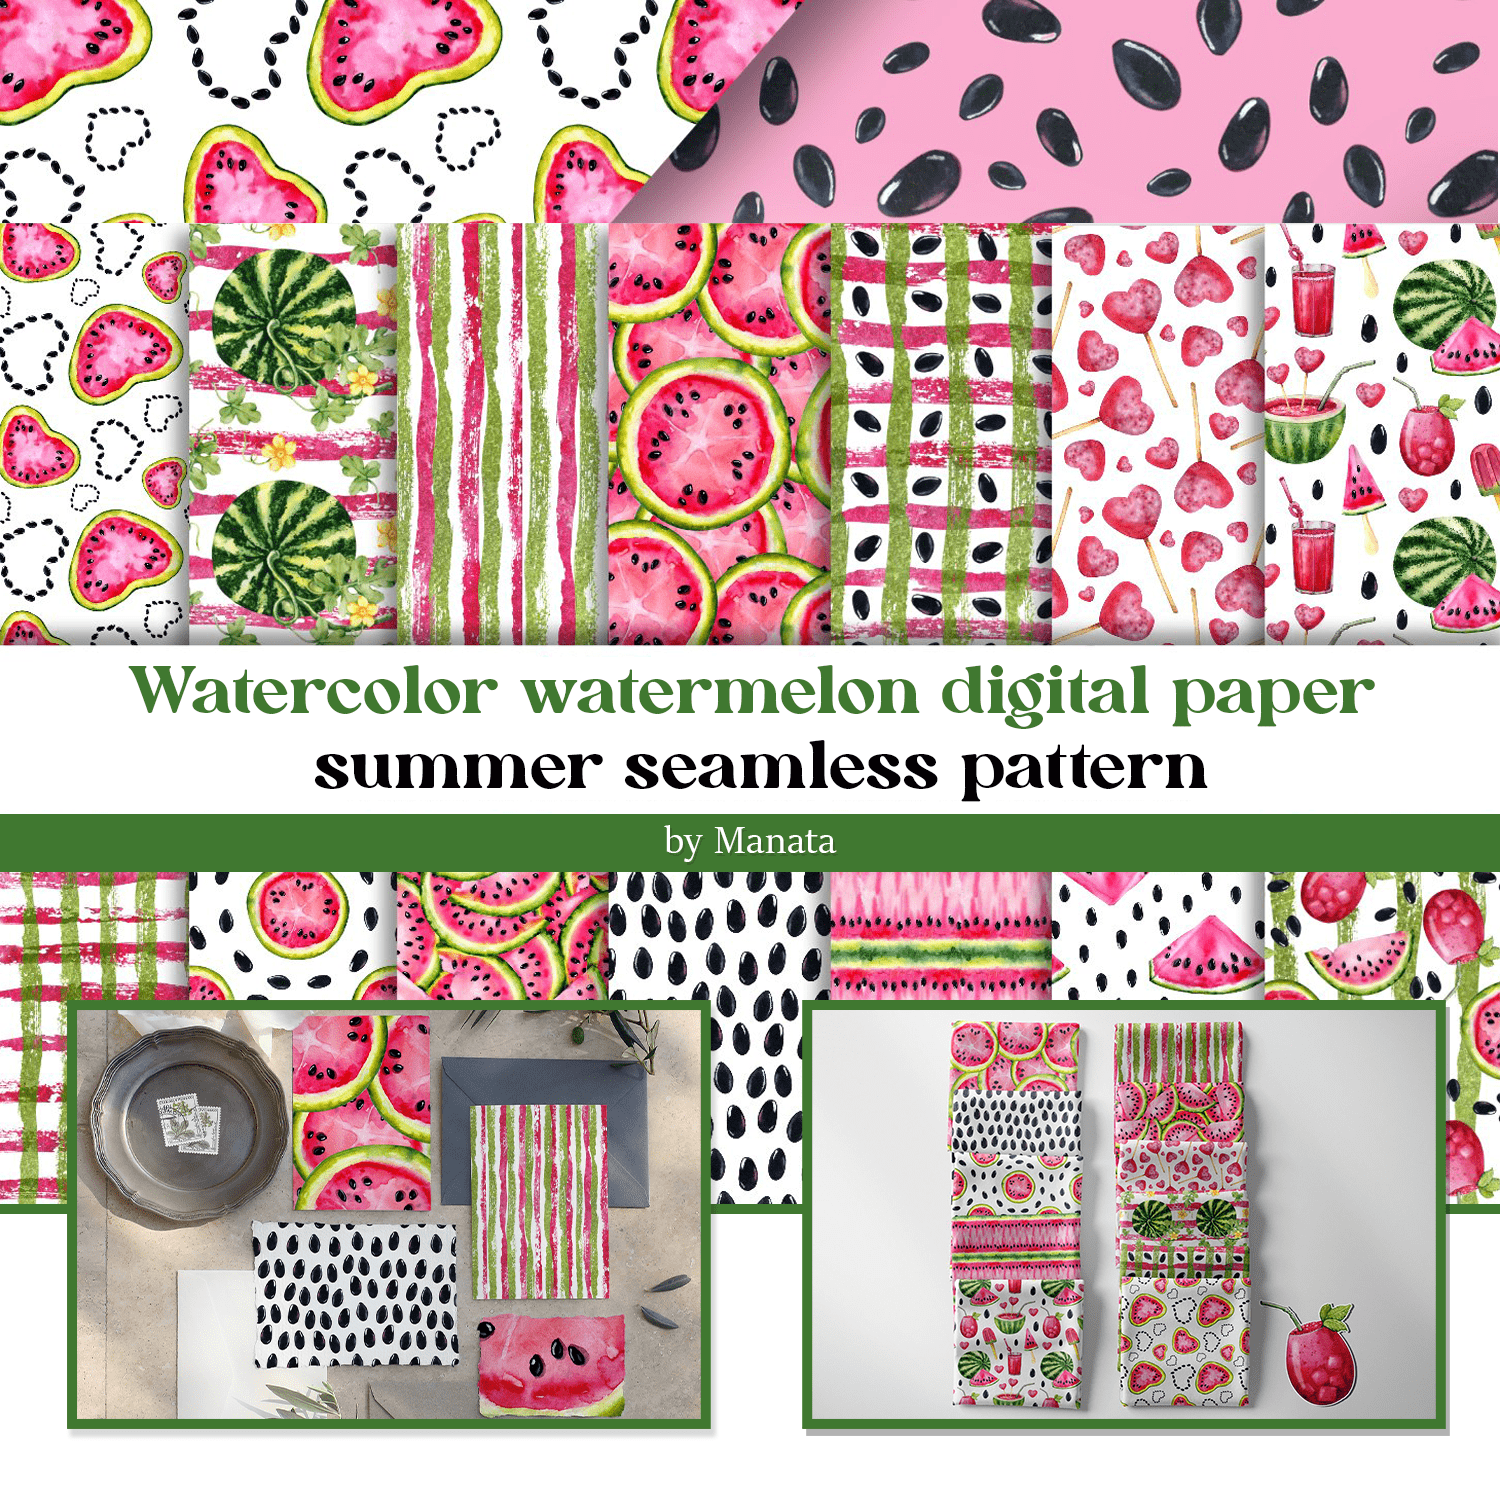 Watercolor watermelon digital paper summer seamless pattern created by Manata.